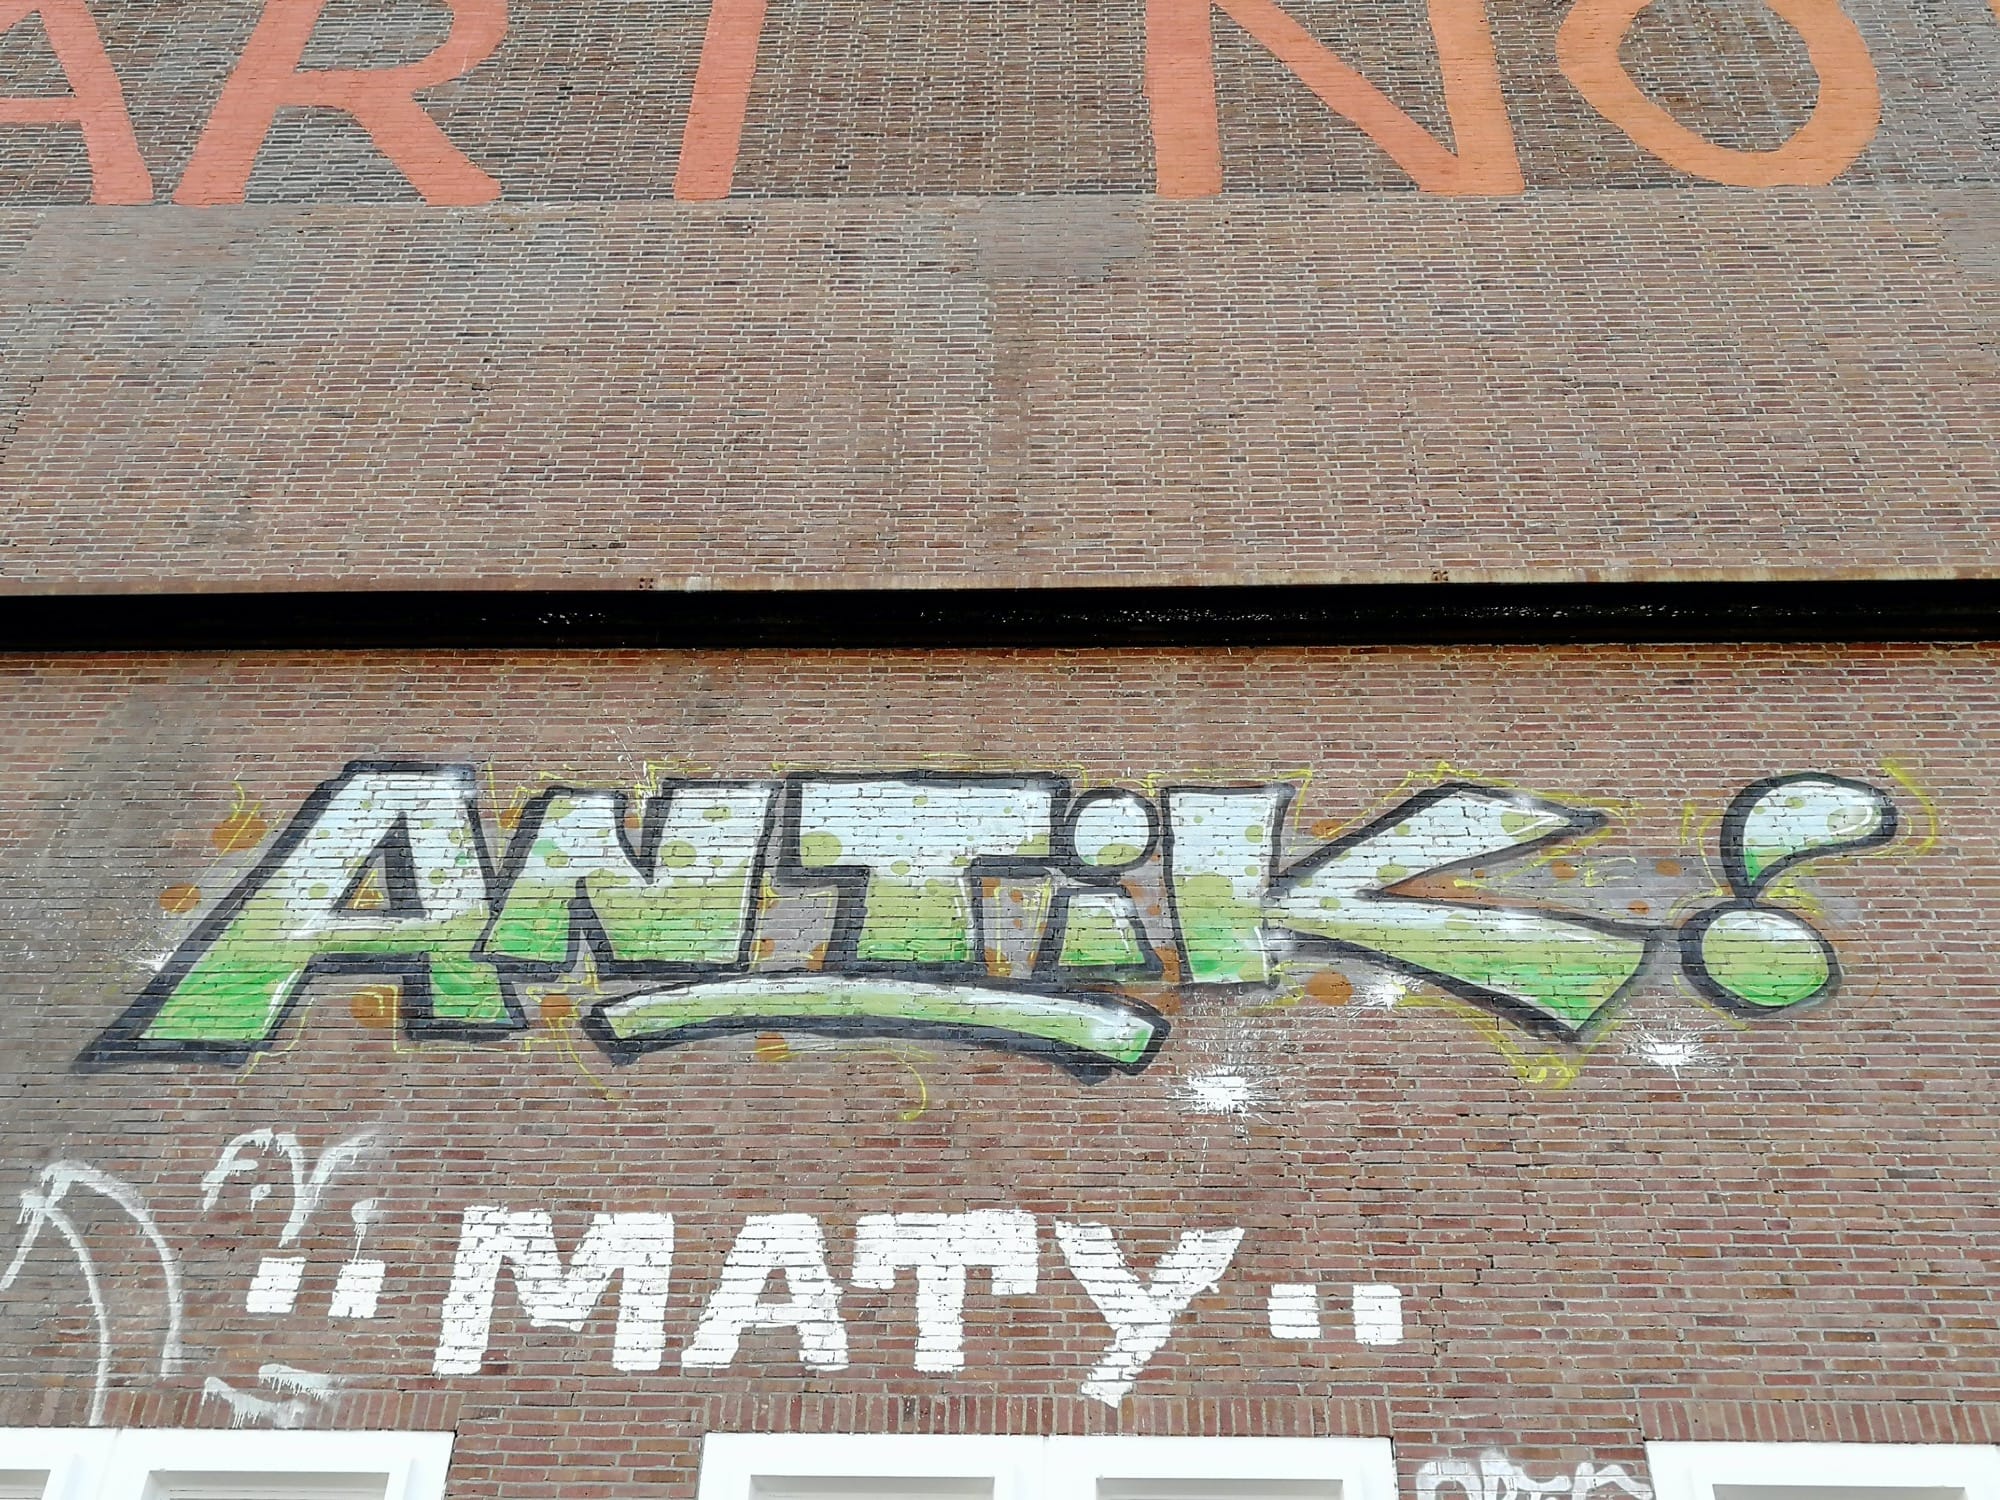 Graffiti 1718 Antik captured by Rabot in Amsterdam Netherlands